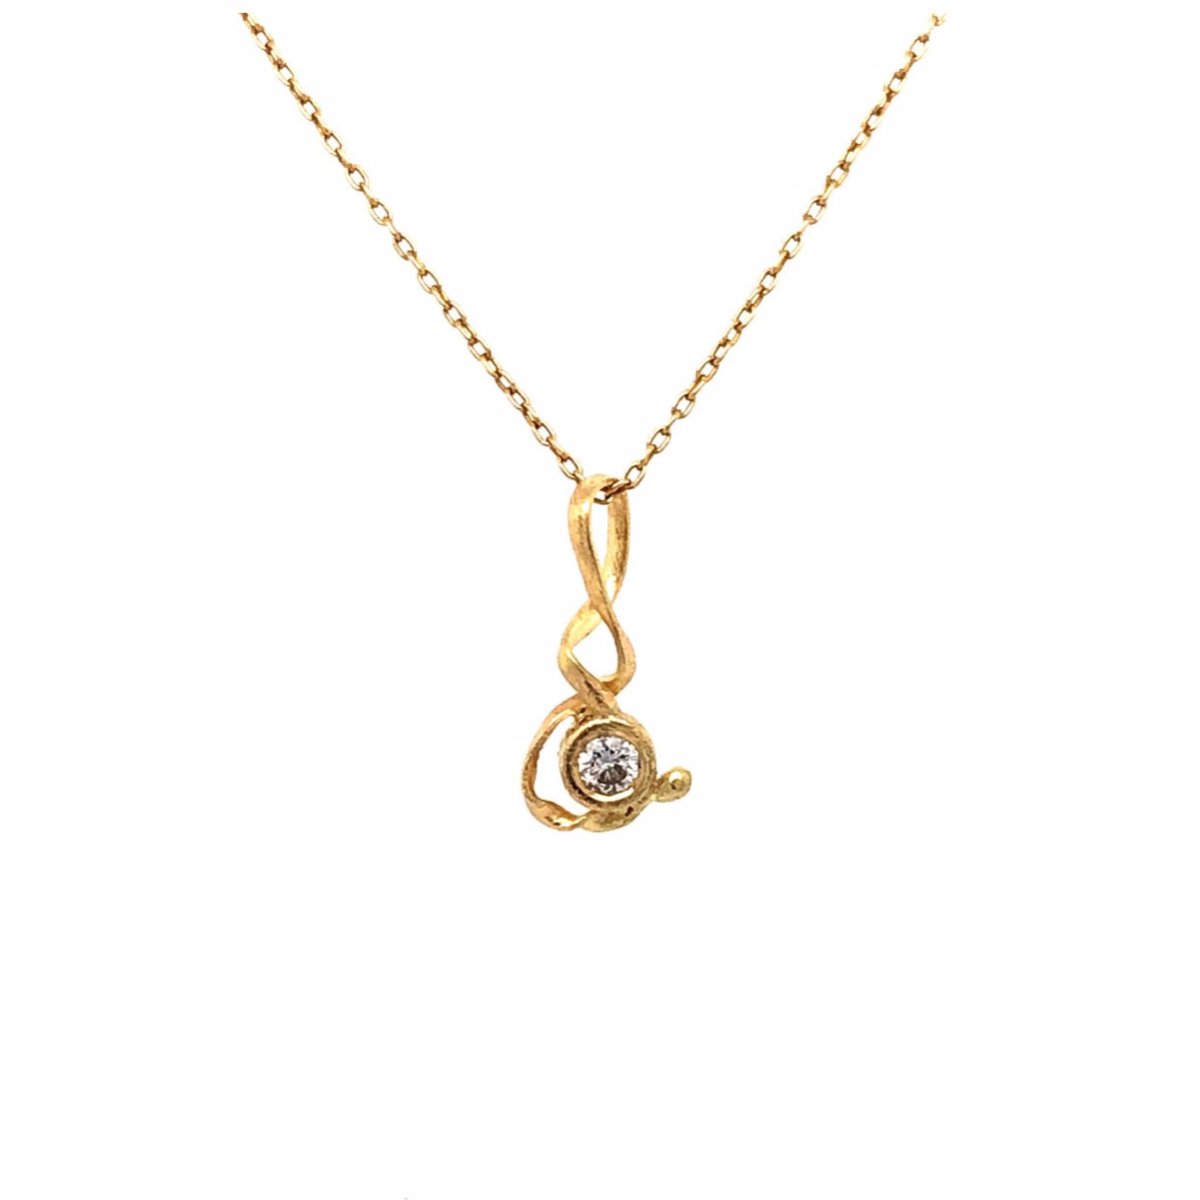 Flair Necklace - Diamond Pendant - 18 kt. gold